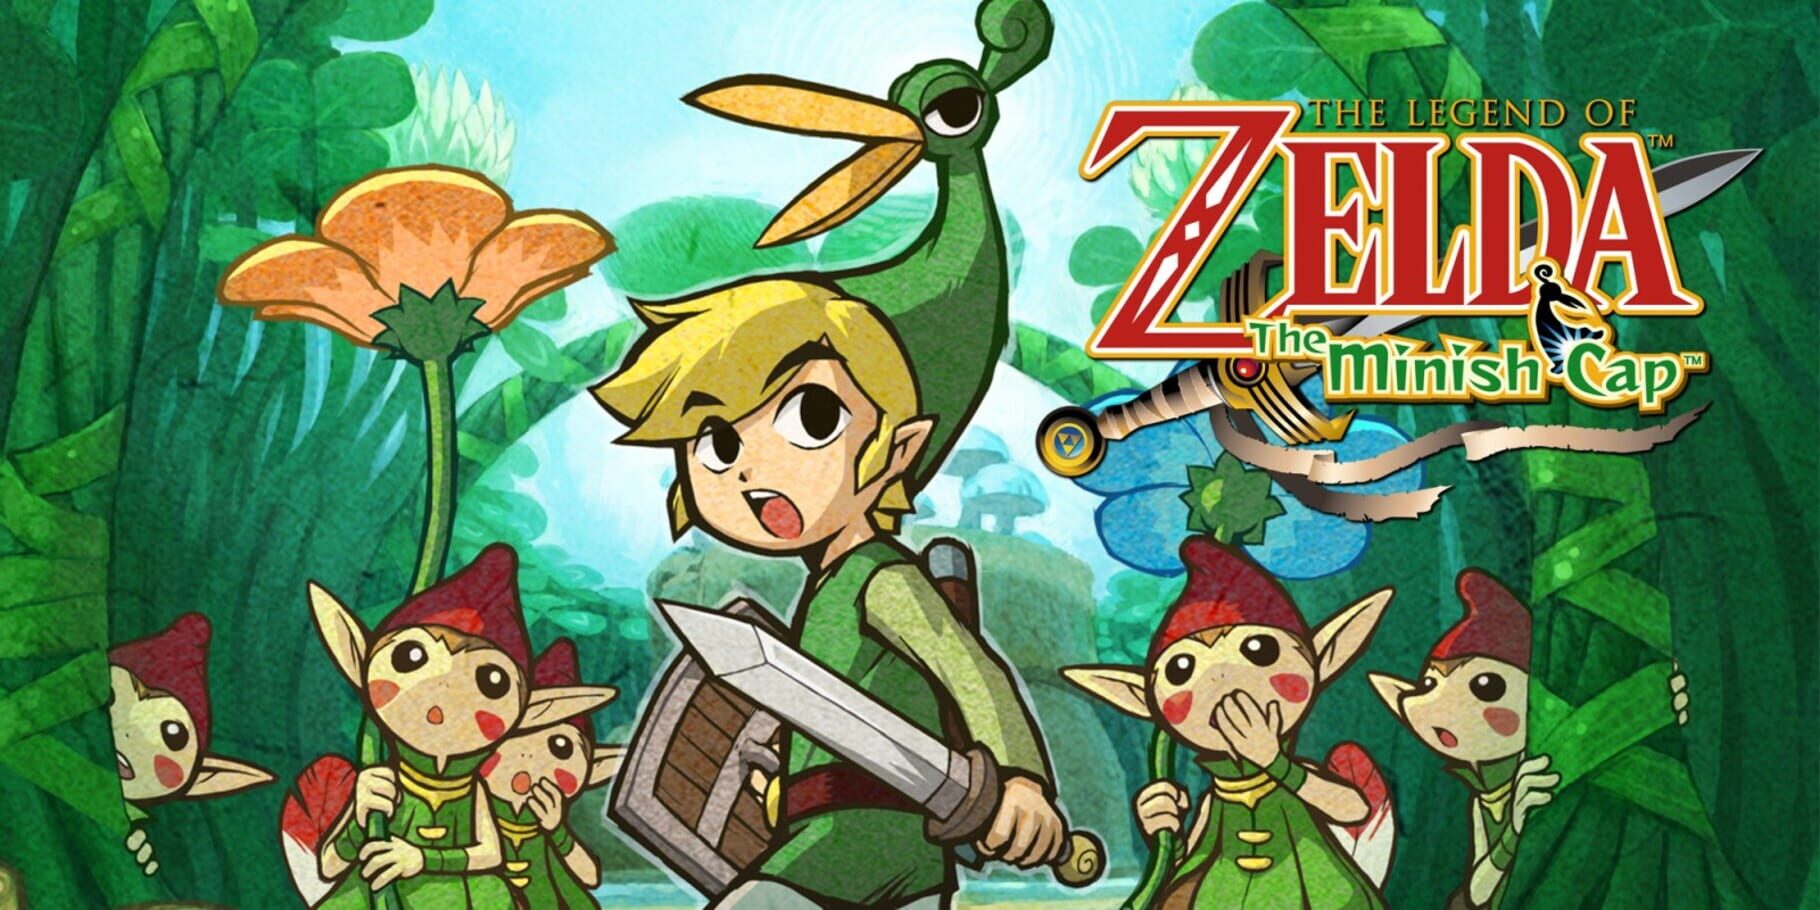 Arte - The Legend of Zelda: The Minish Cap